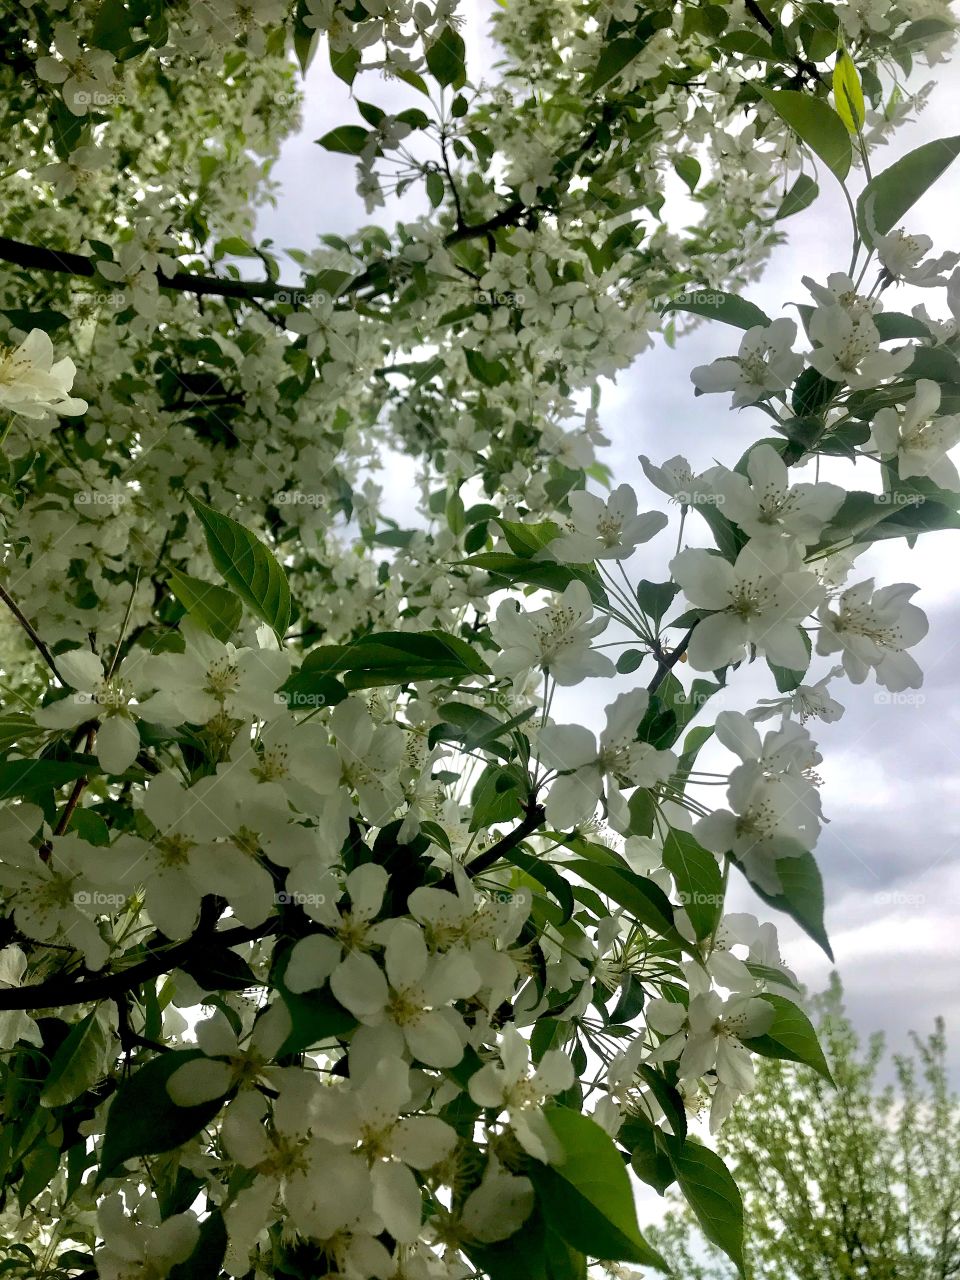 Prince Albert, SK, CA.  An ornamental apple tree blooms luxuriously.